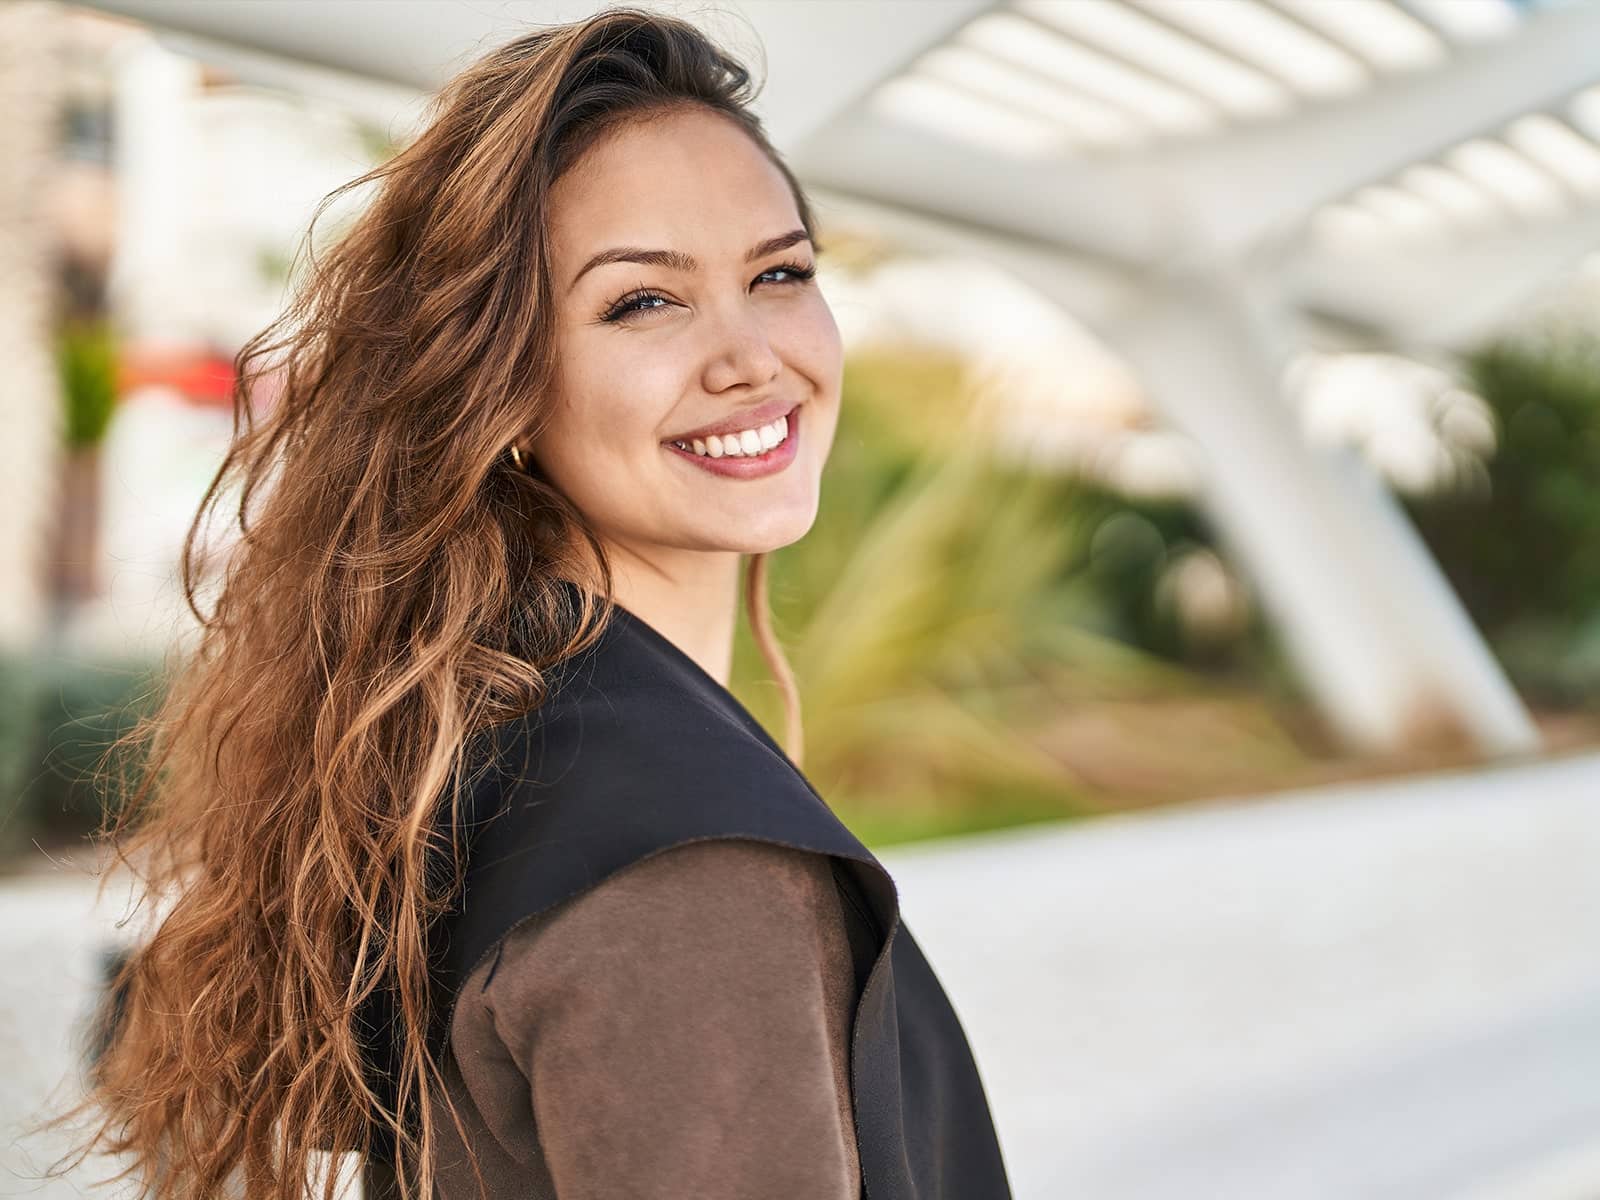 young hispanic woman smiling outdoors